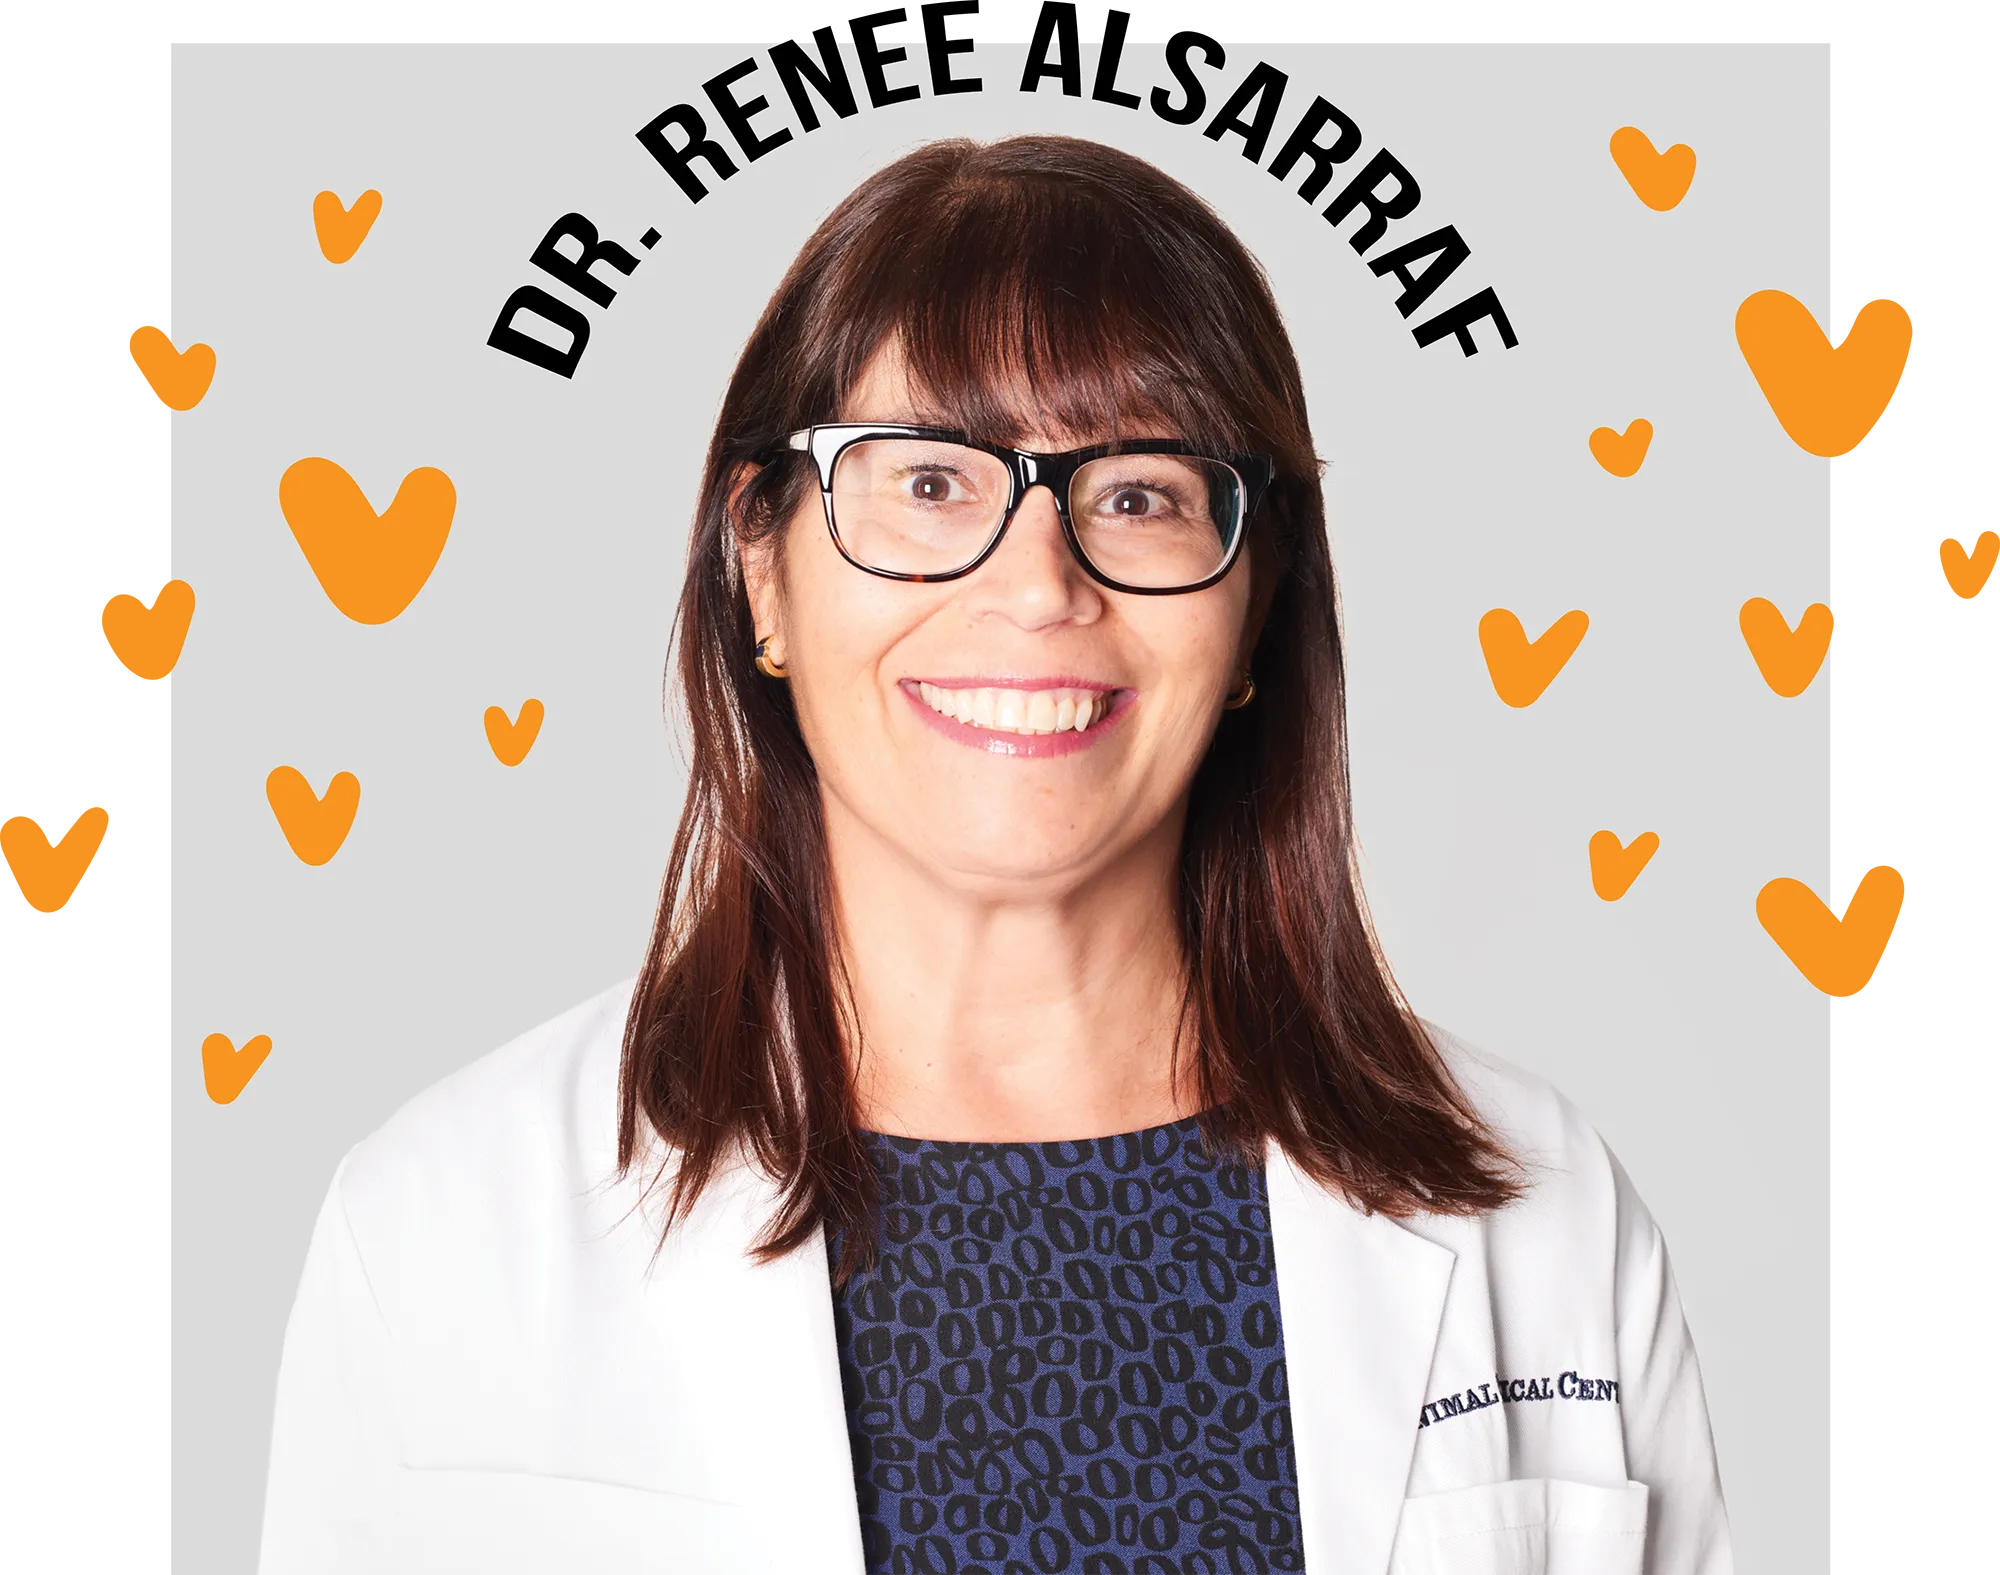 Dr. Renee Alsarraf headshot surrounded by orange hearts